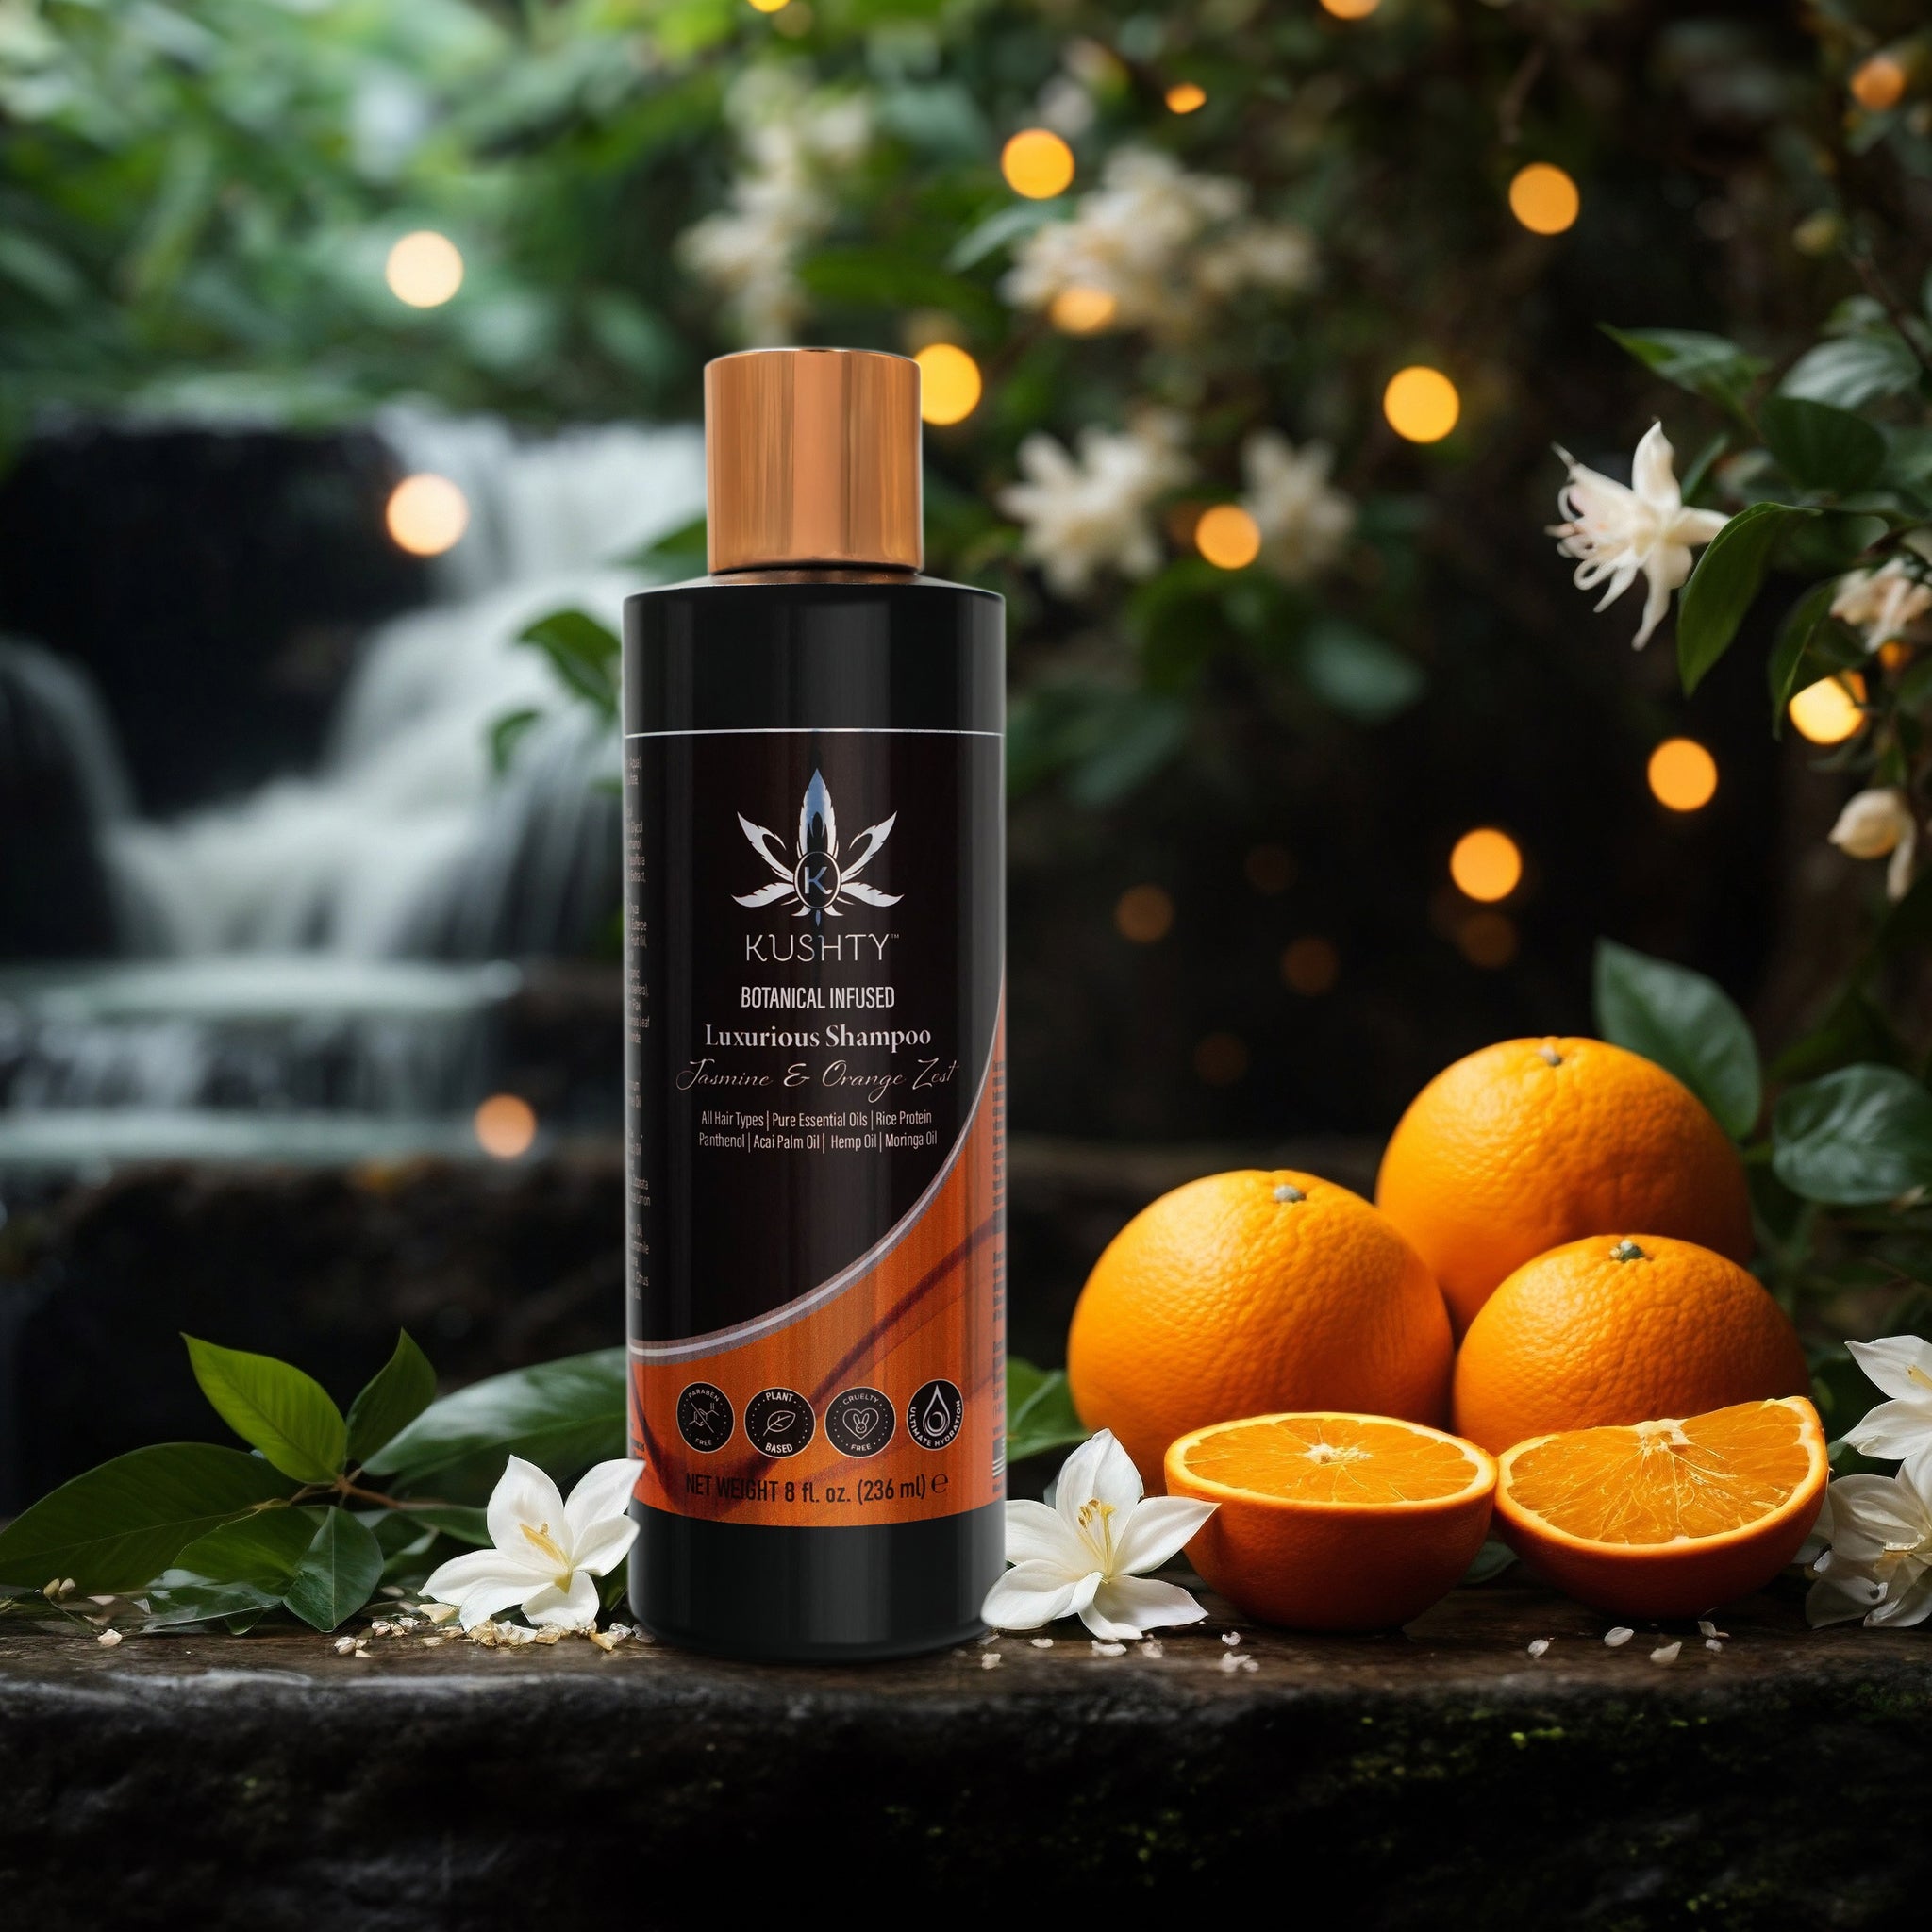 Luxurious Shampoo Jasmine & Orange Zest